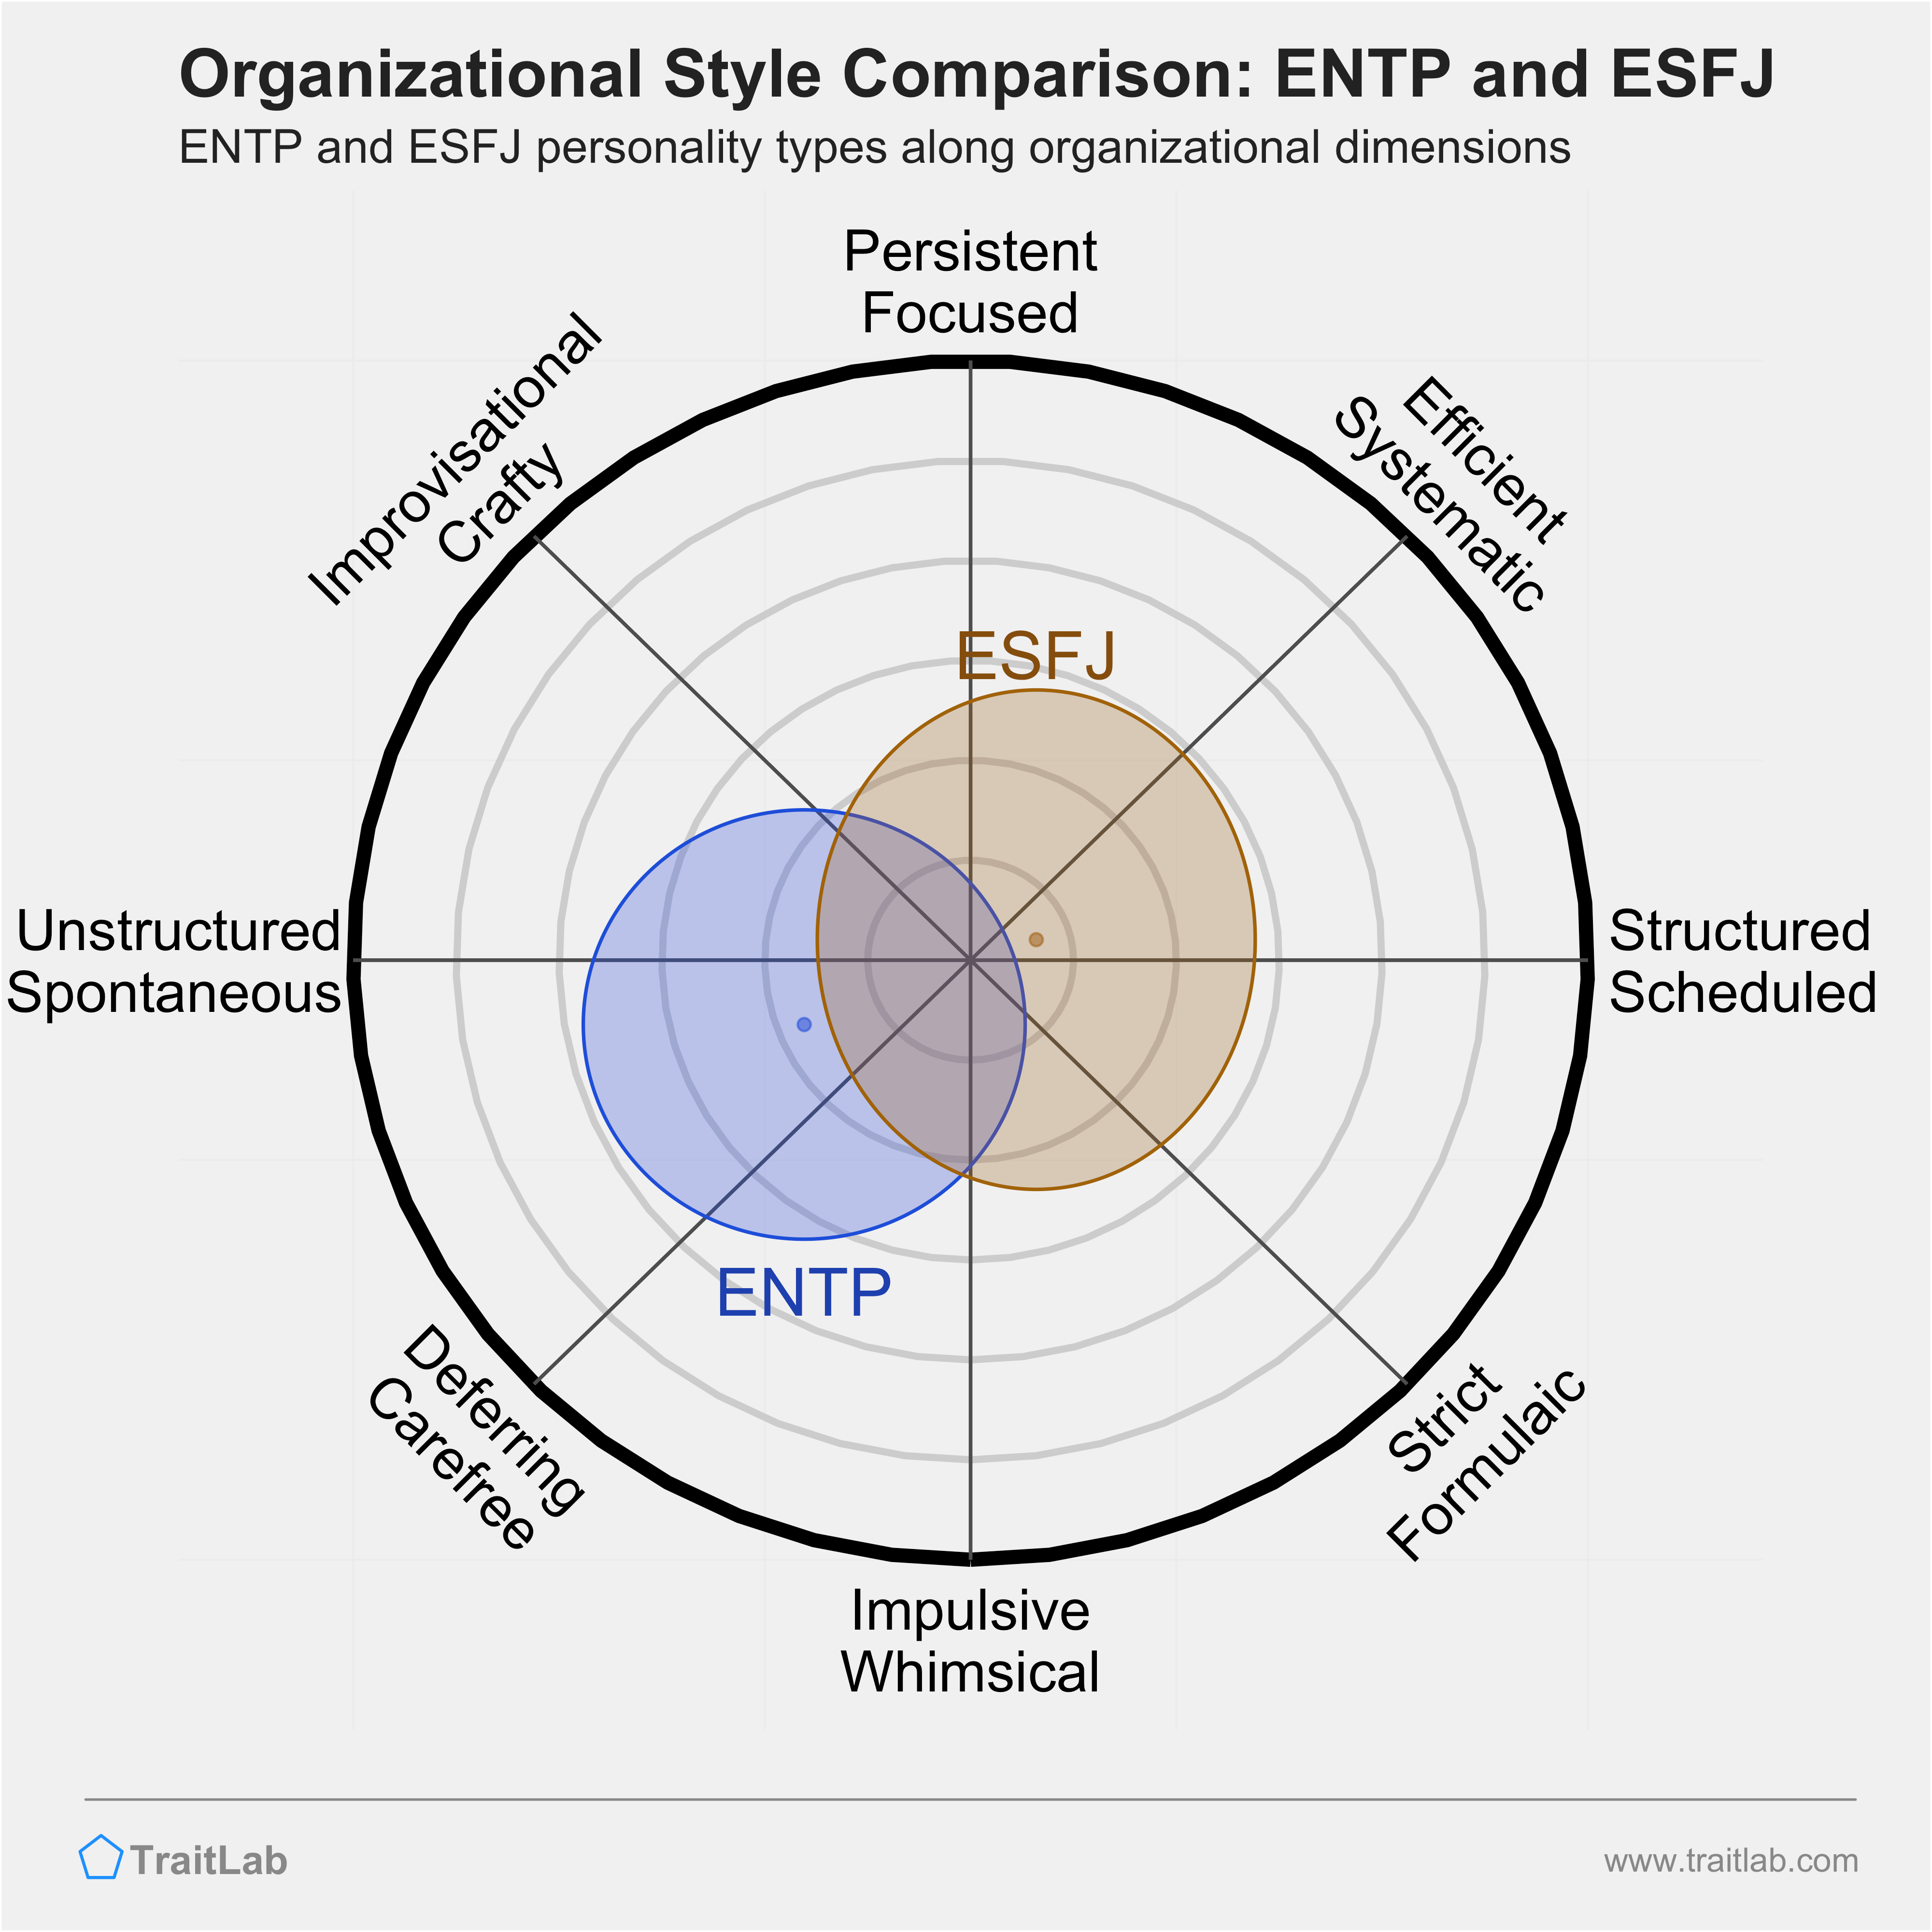 ENTP and ESFJ comparison across organizational dimensions